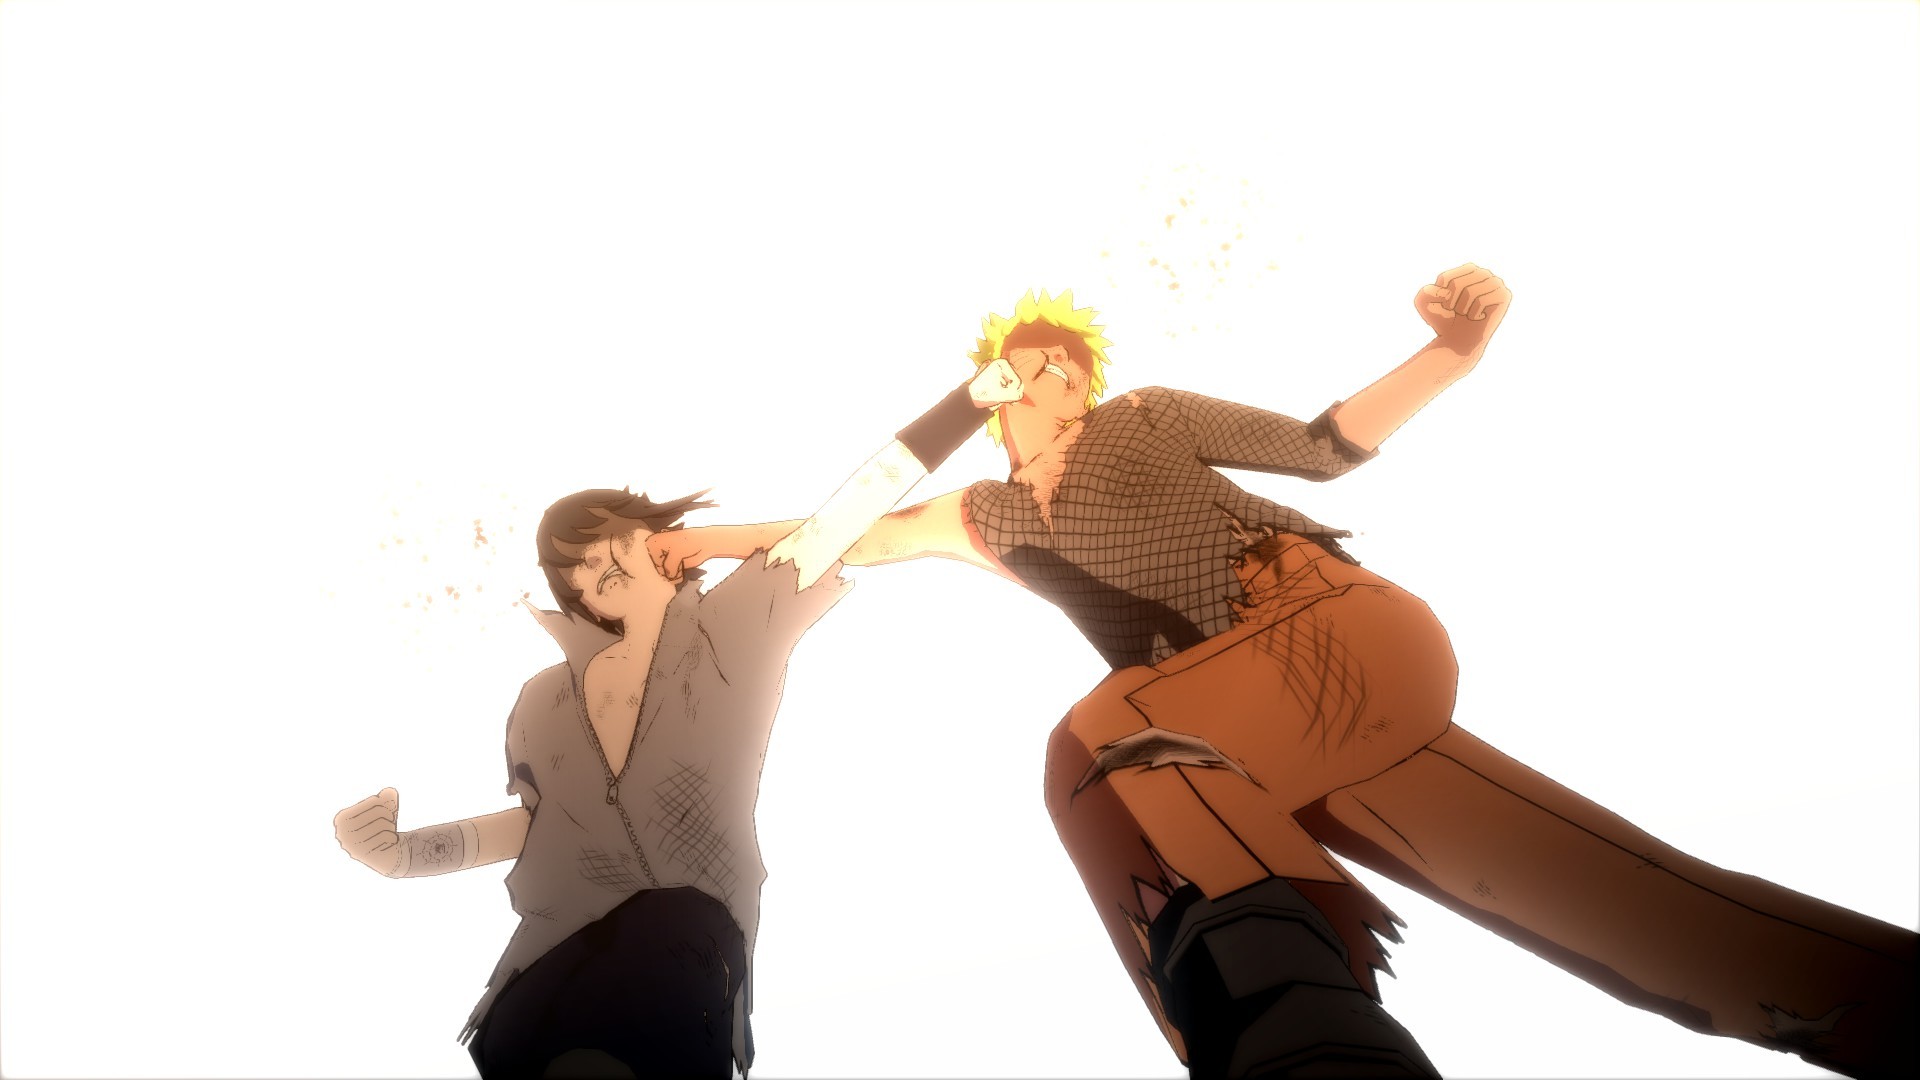 anime boys fighting